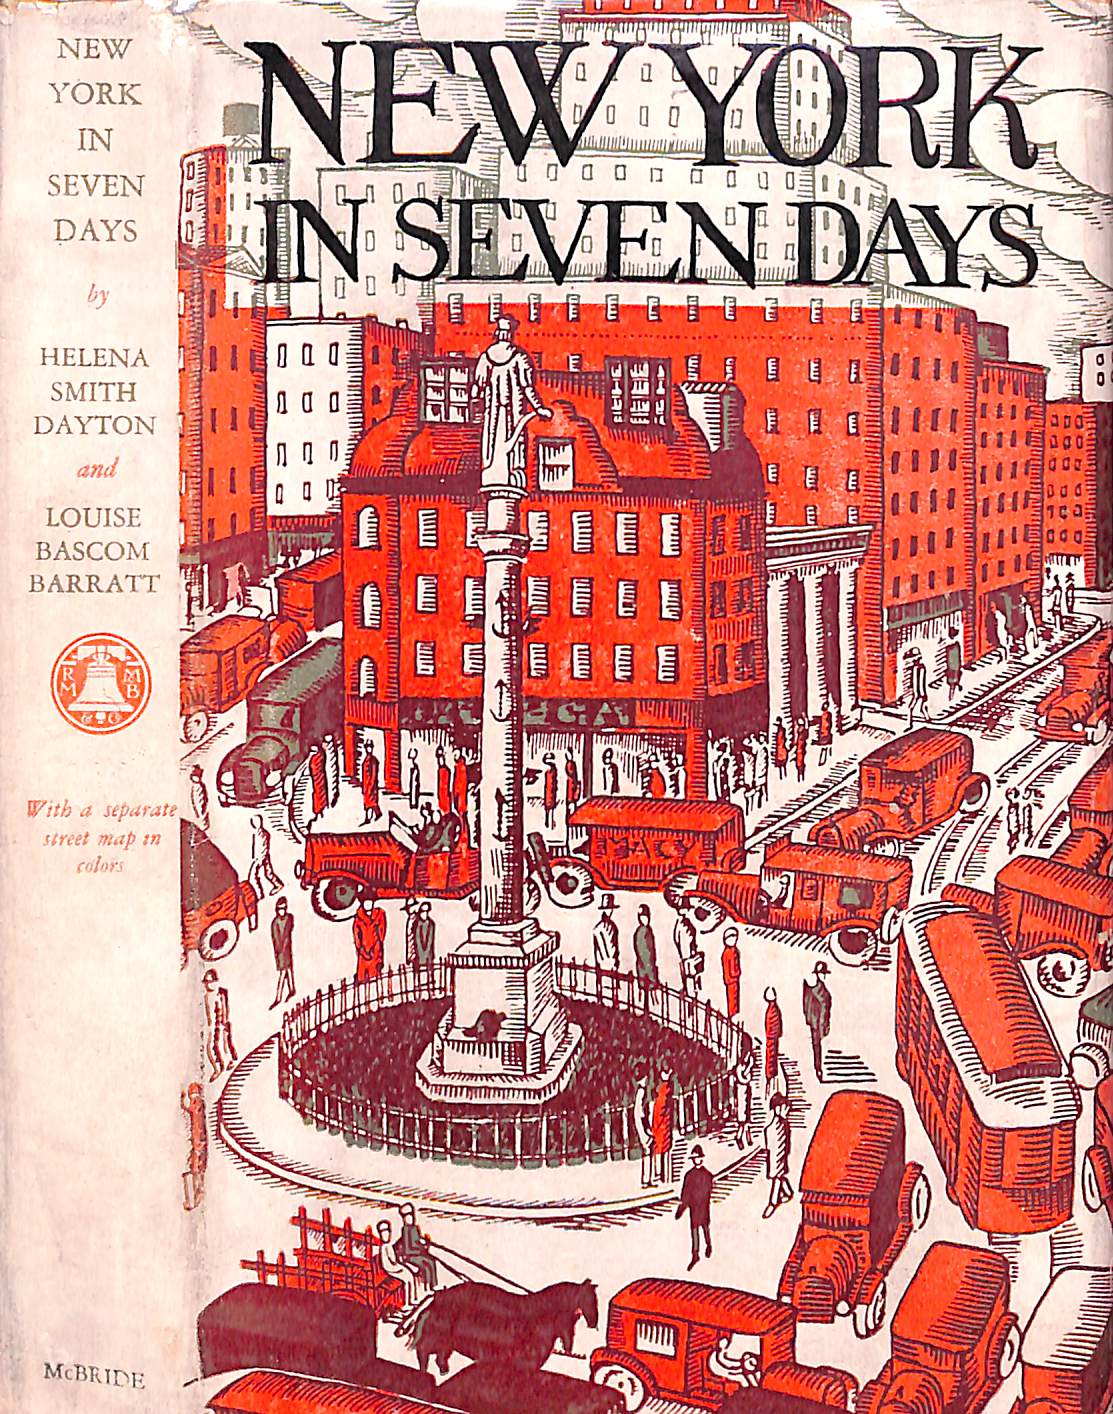 "New York In Seven Days" 1926 DAYTON, Helena Smith and BARRATT, Louise Bascom